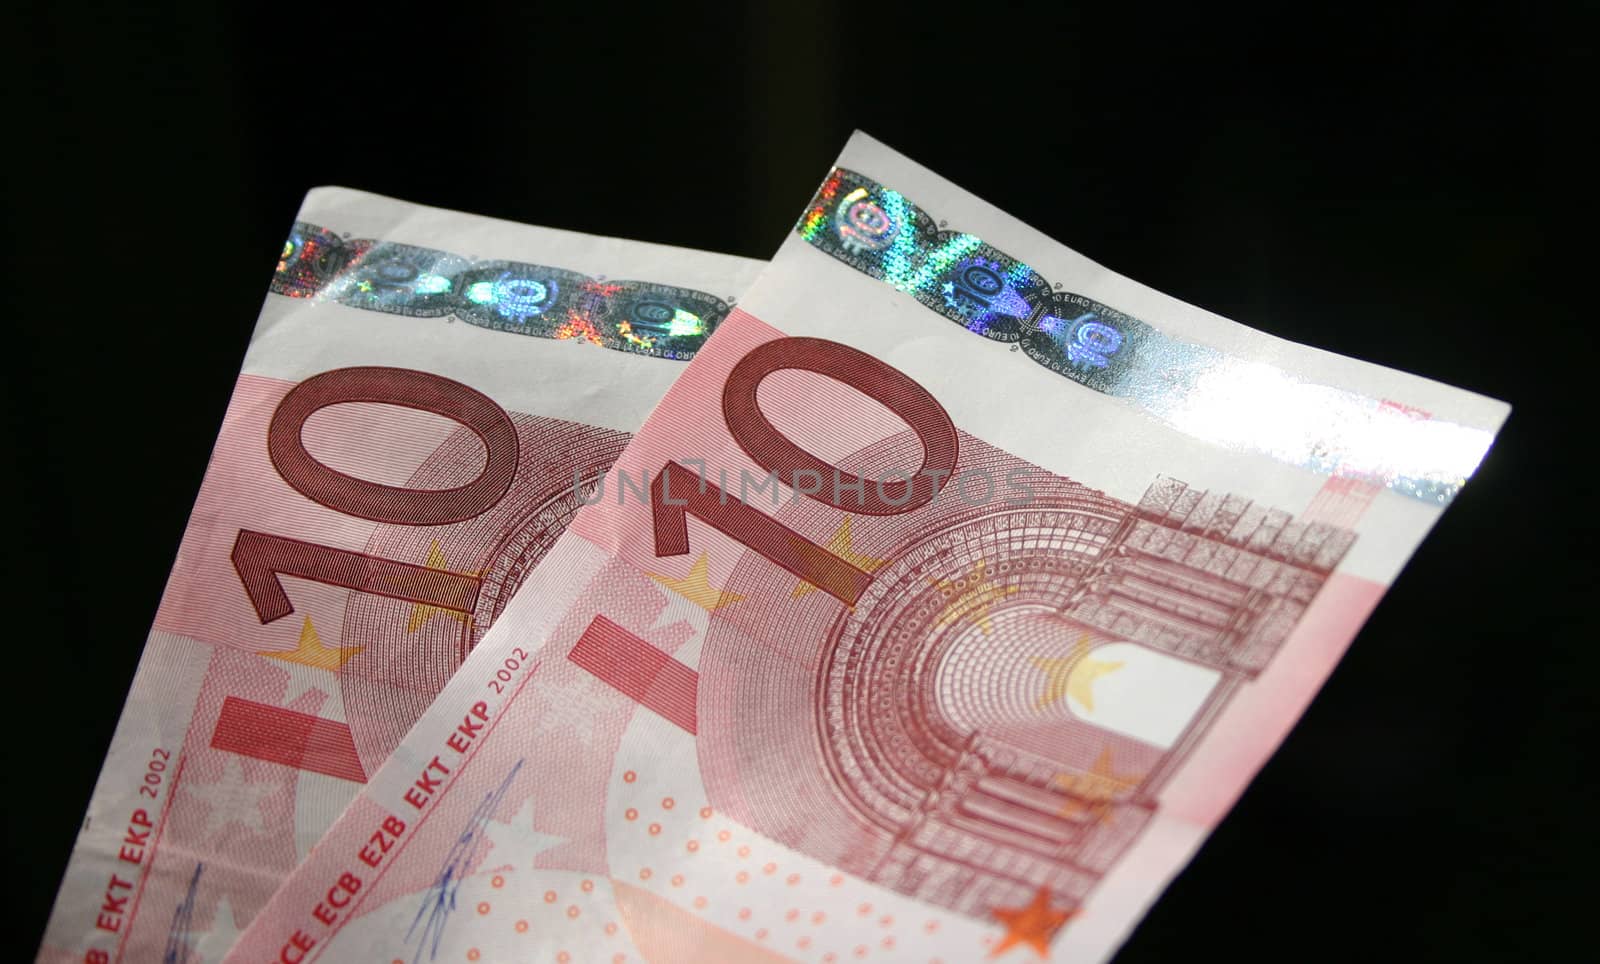 10 Euro banknote